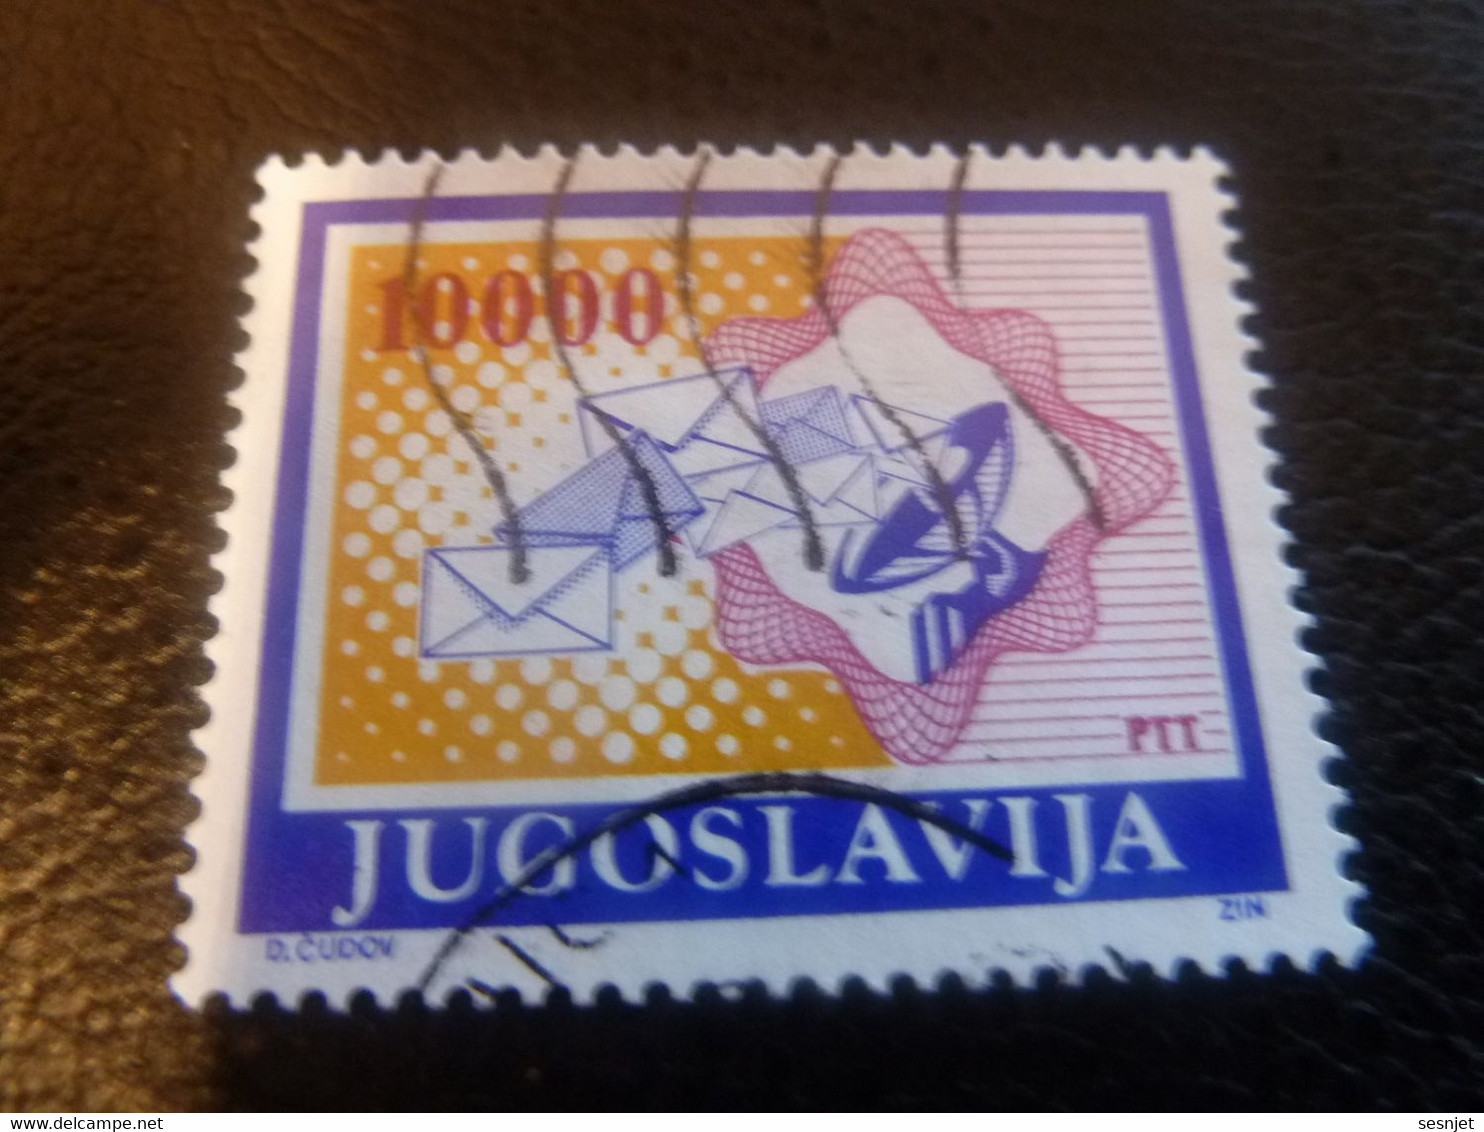 Ptt - Jugoslavija - D Cudov - Val 10000 - Multicolore - Oblitéré - - Used Stamps